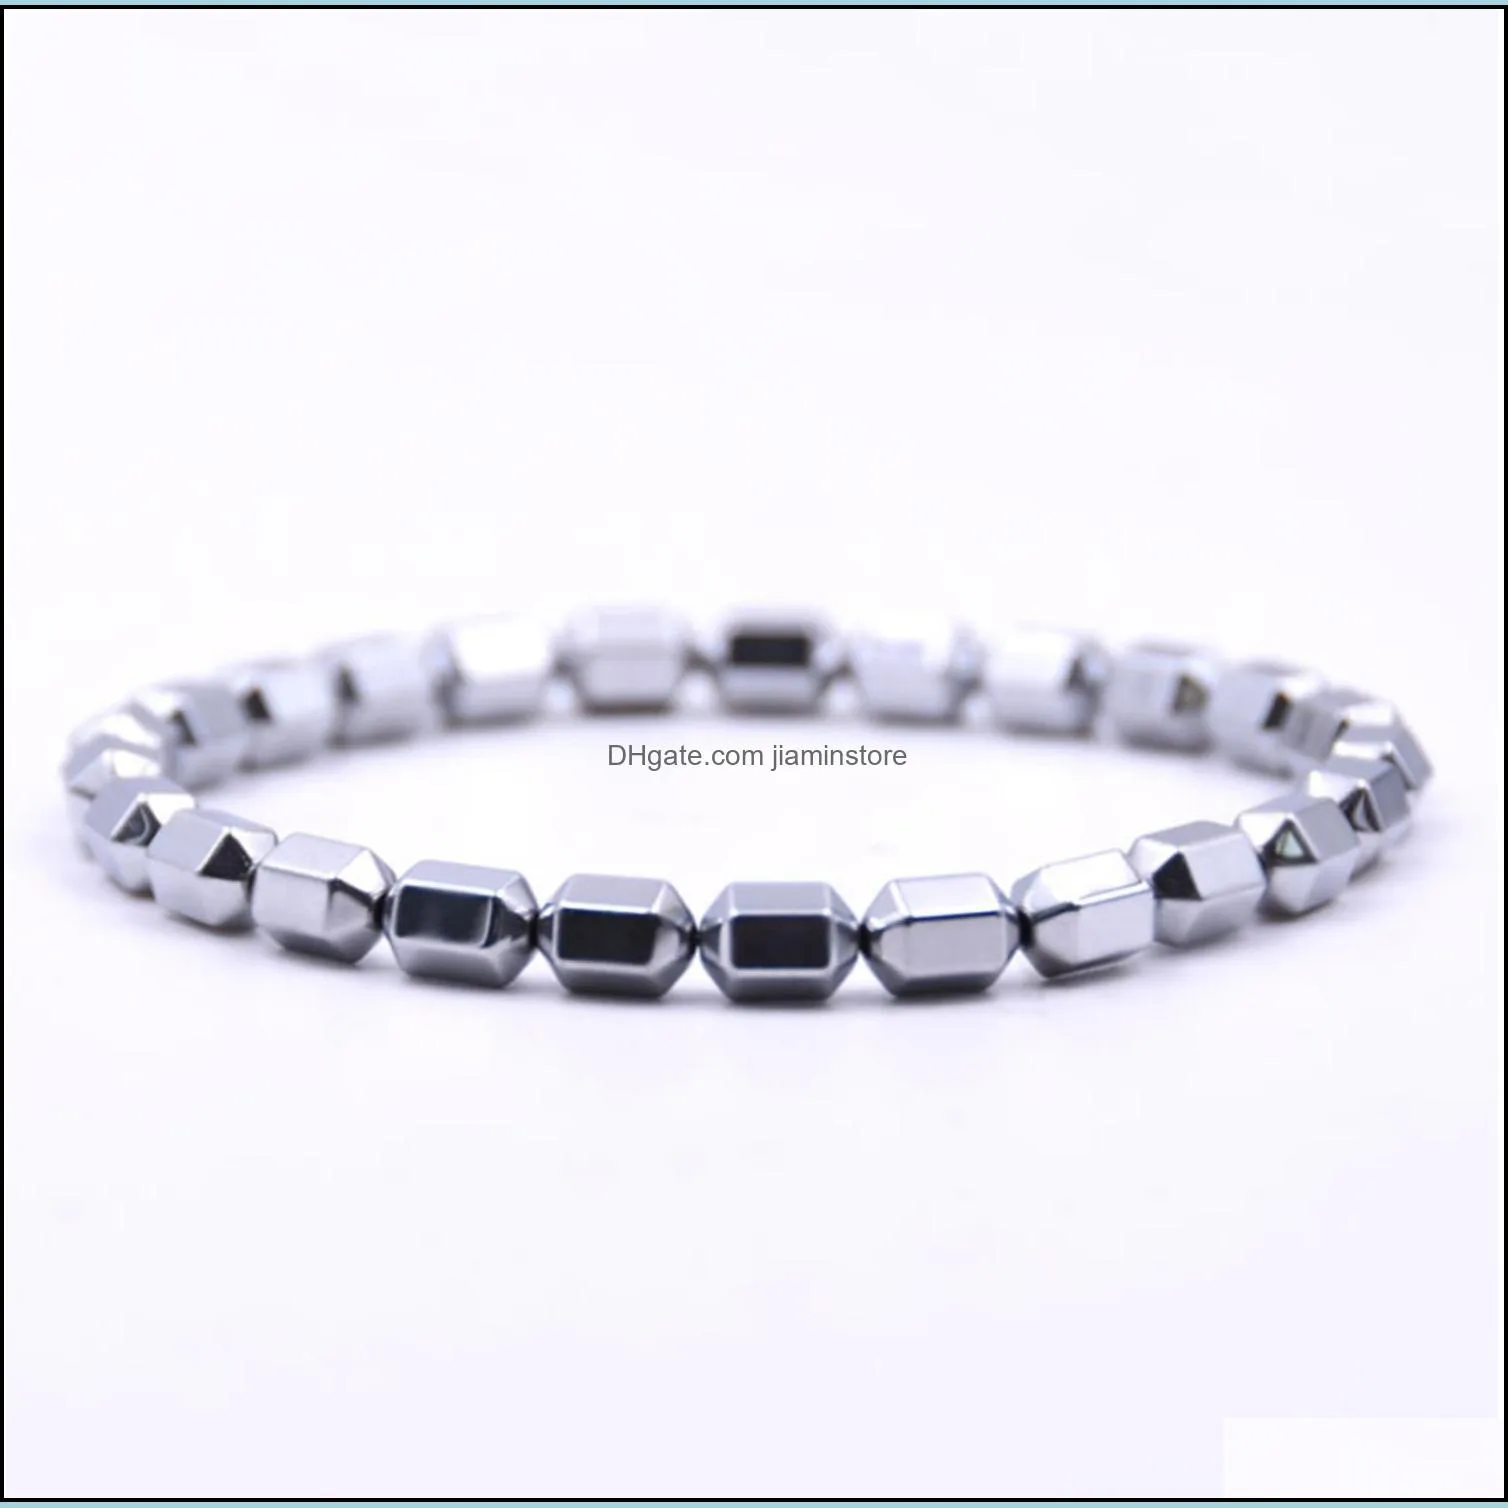 Black gallstone hexagonal column bracelet charm men`s jewelry handmade birthday Christmas gifts